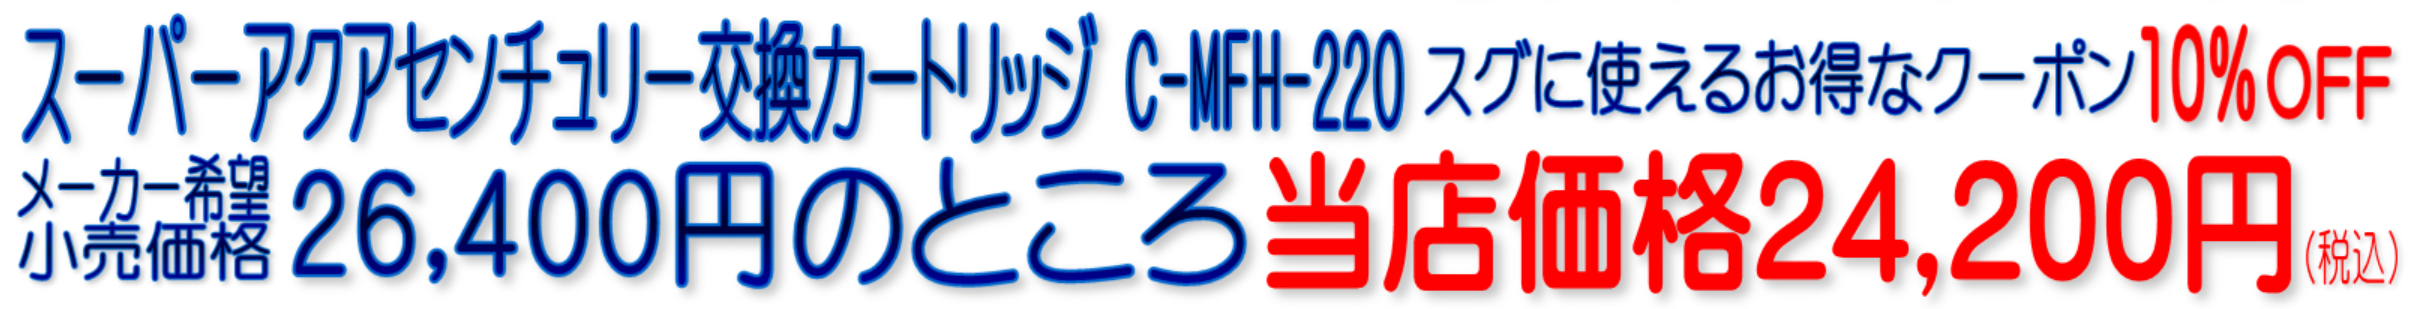 MFH-222 C-MFH-KS スーパーアクアセンチュリー